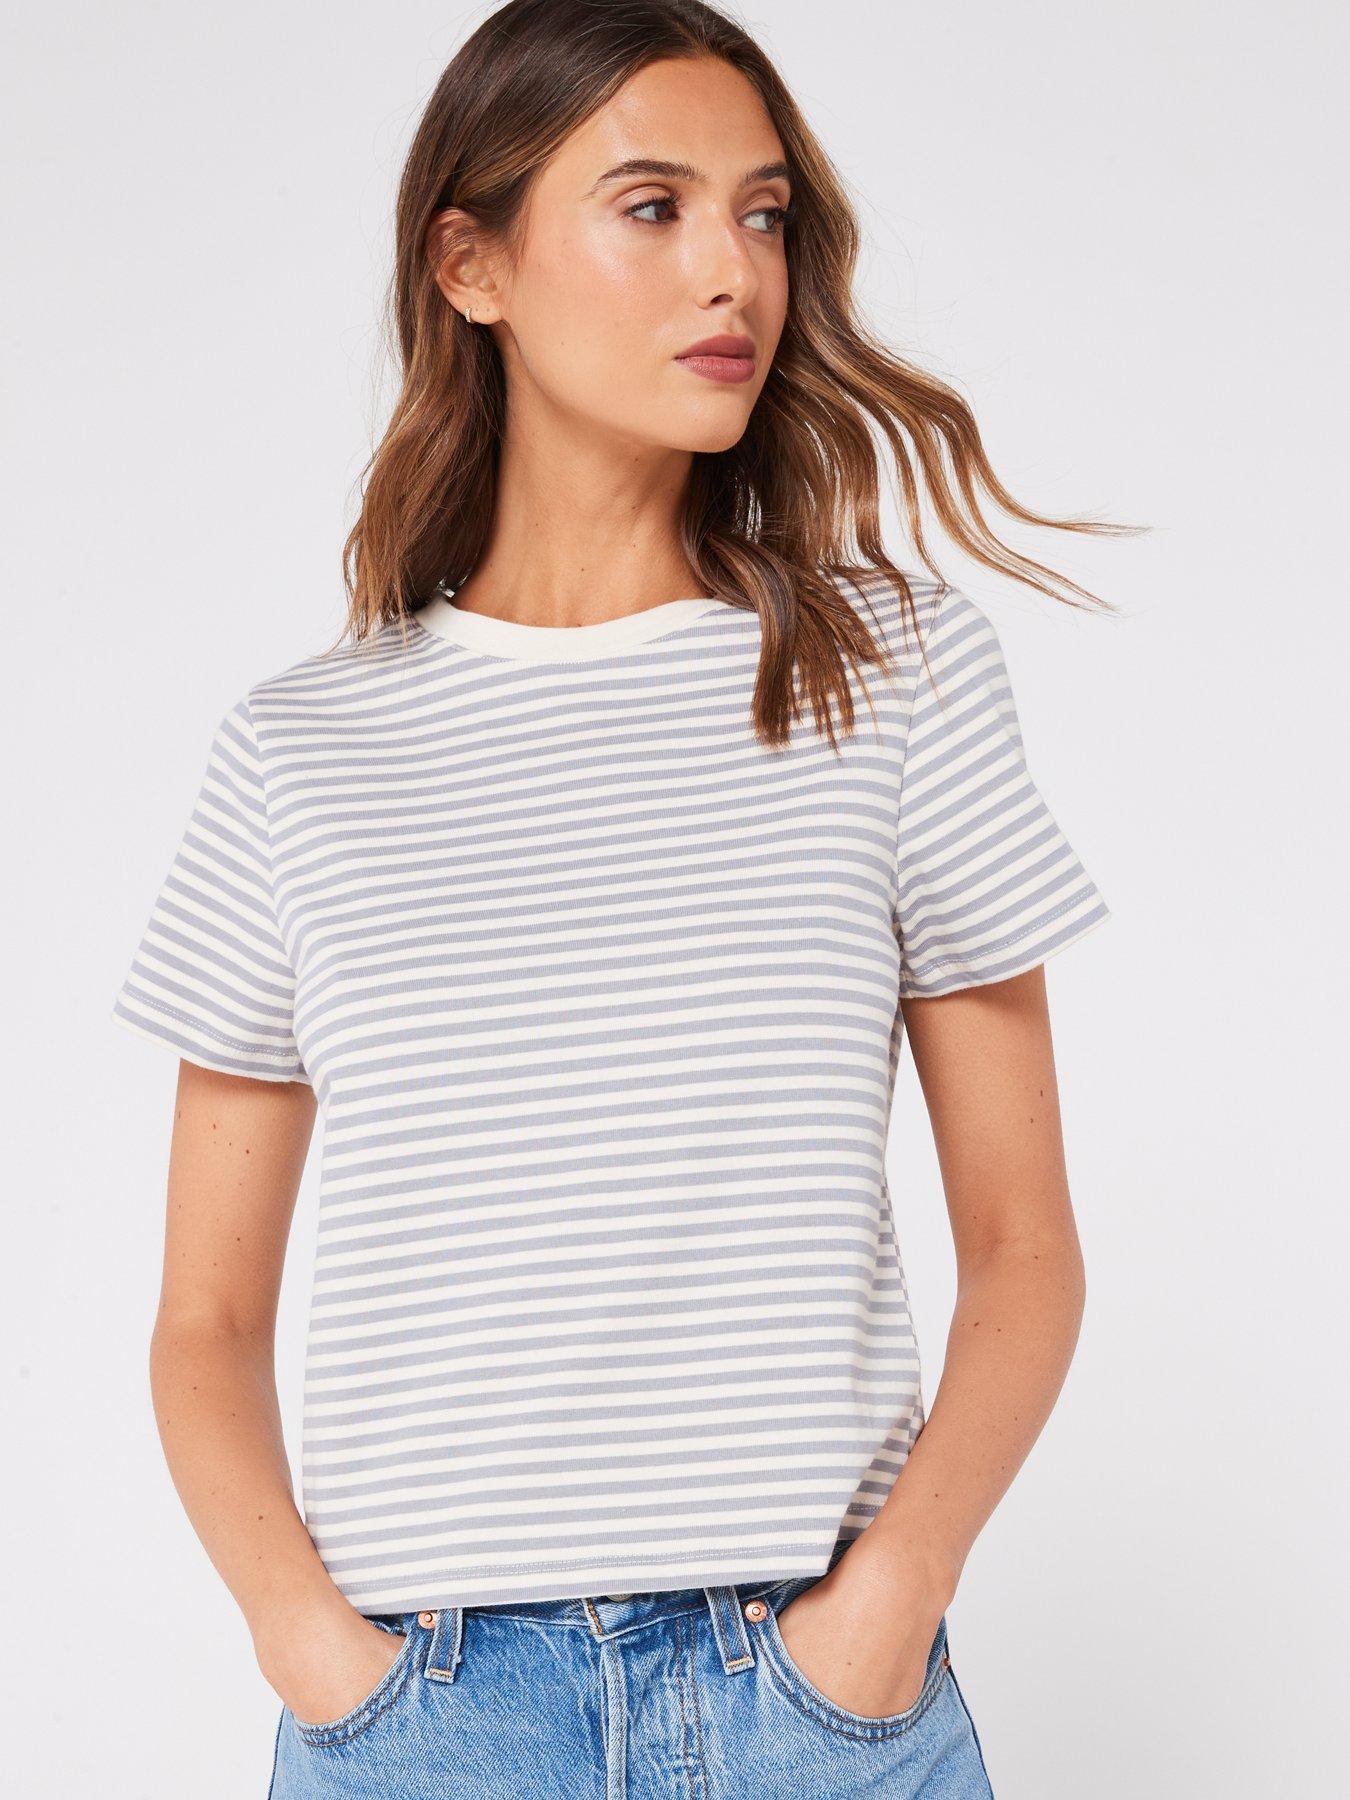 Silver Sequin Stripe T-Shirt